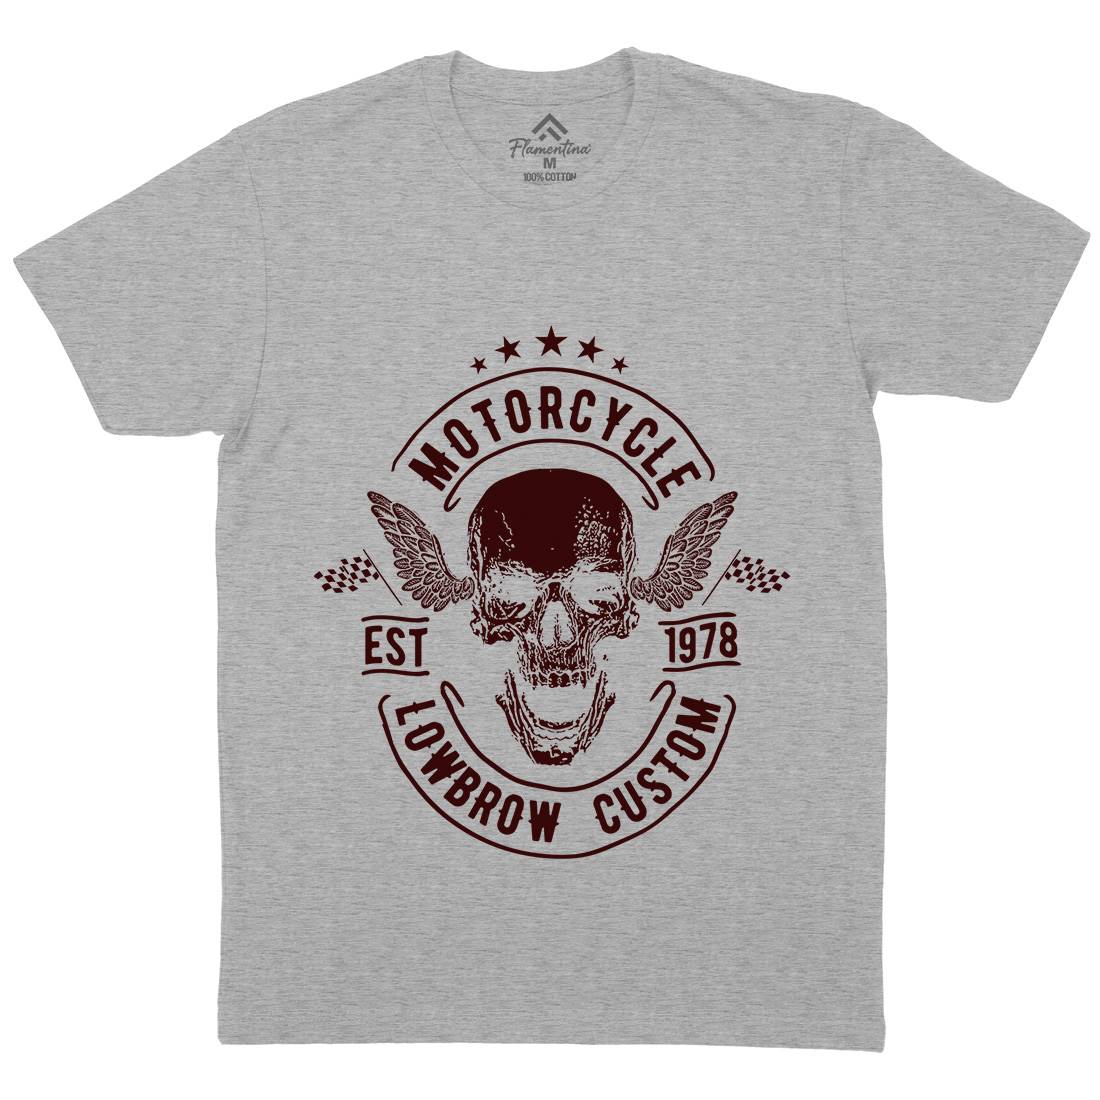 Lowbrow Custom Mens Organic Crew Neck T-Shirt Motorcycles C964